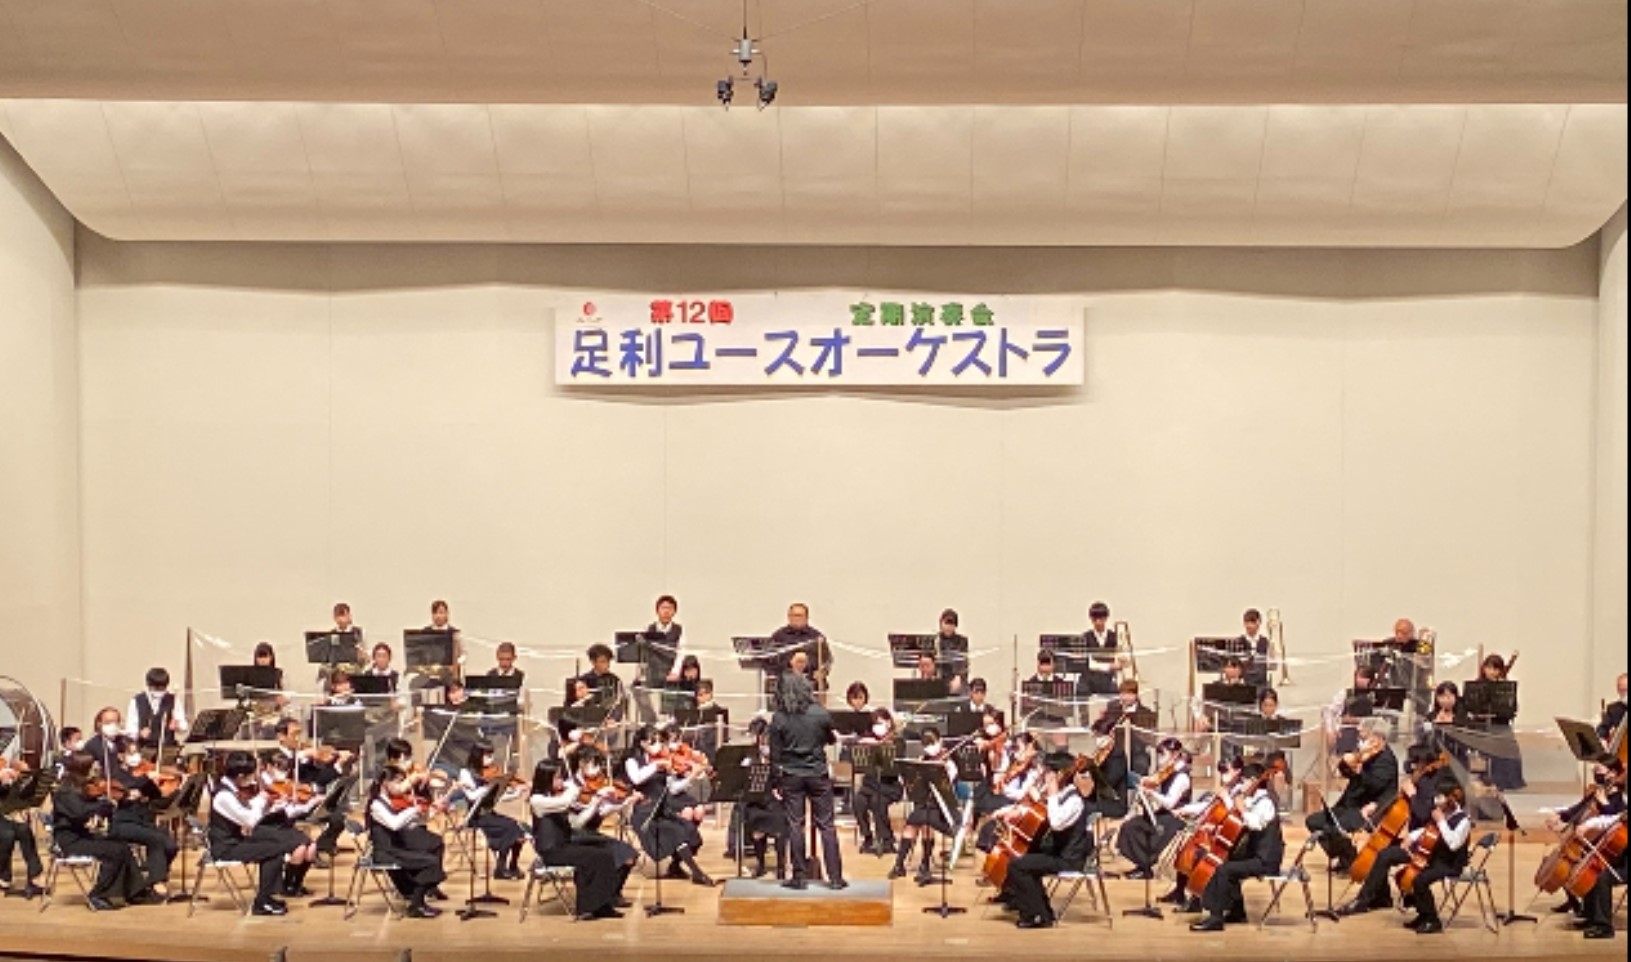 orchestra全体12回公演